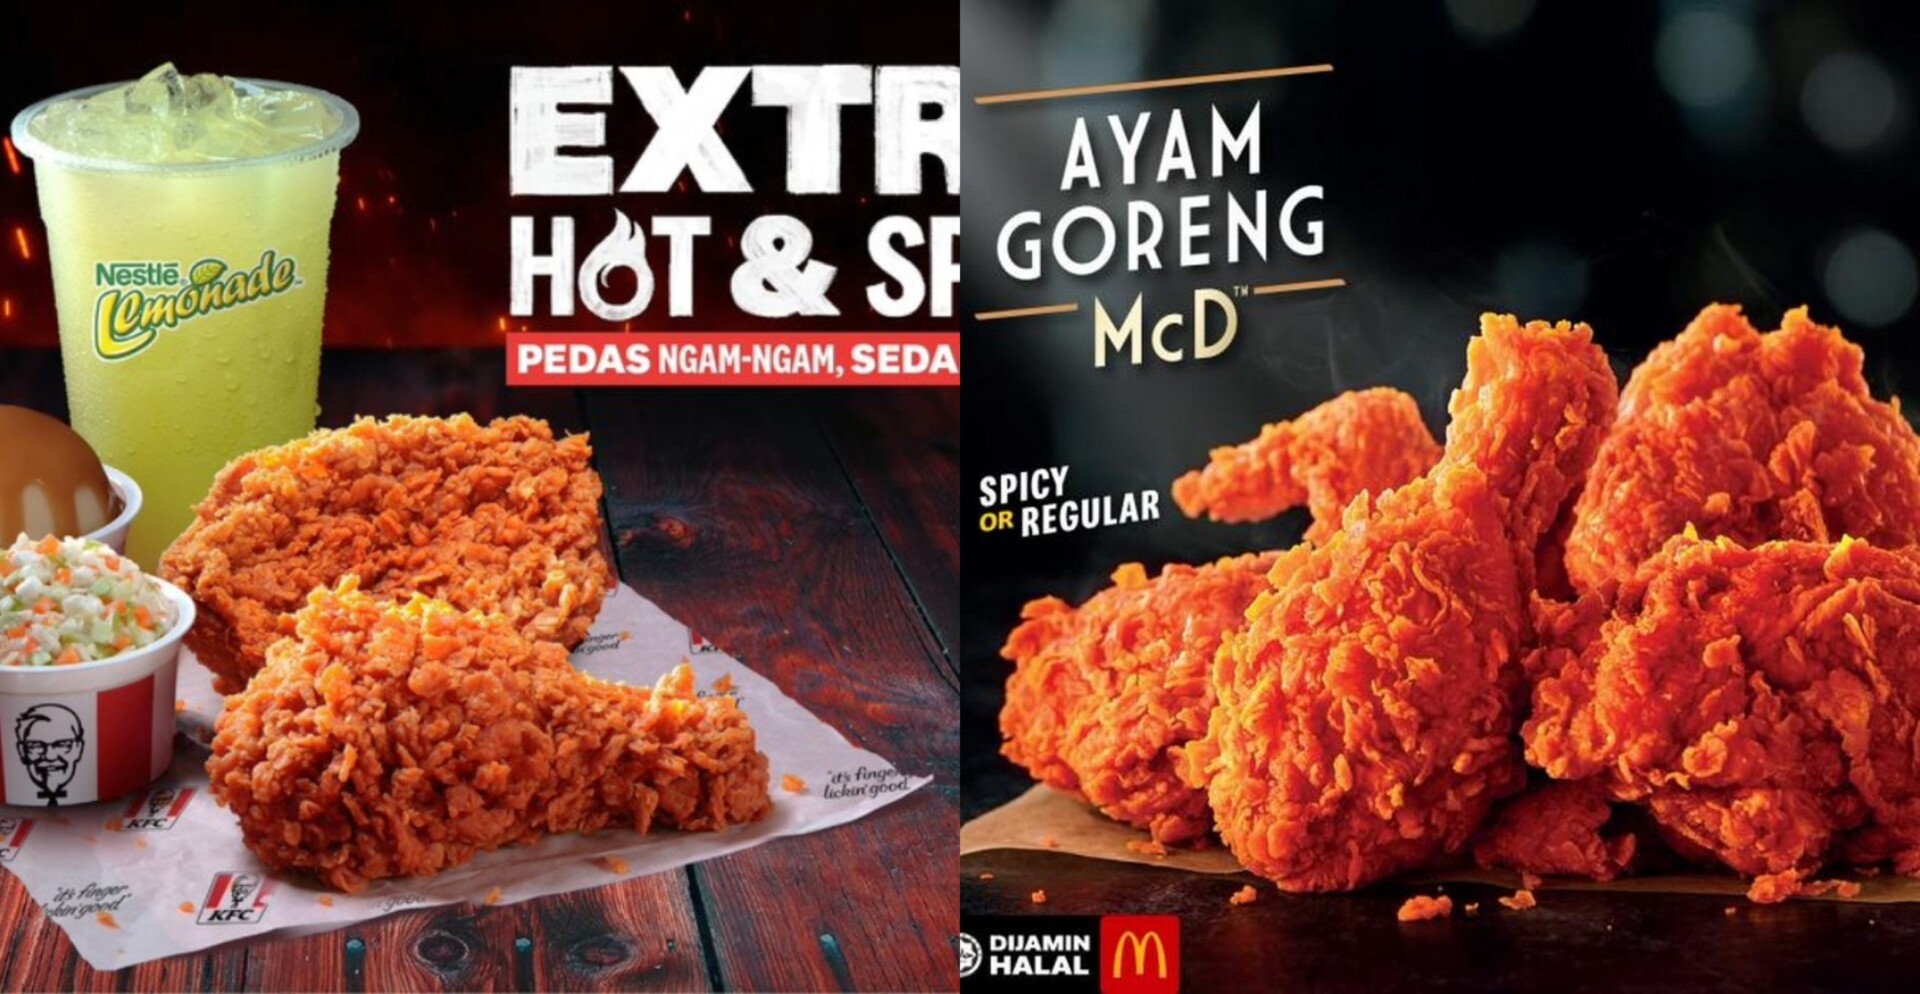 KFC's New Extra Hot & Spicy Chicken vs McD's Spicy Ayam Goreng